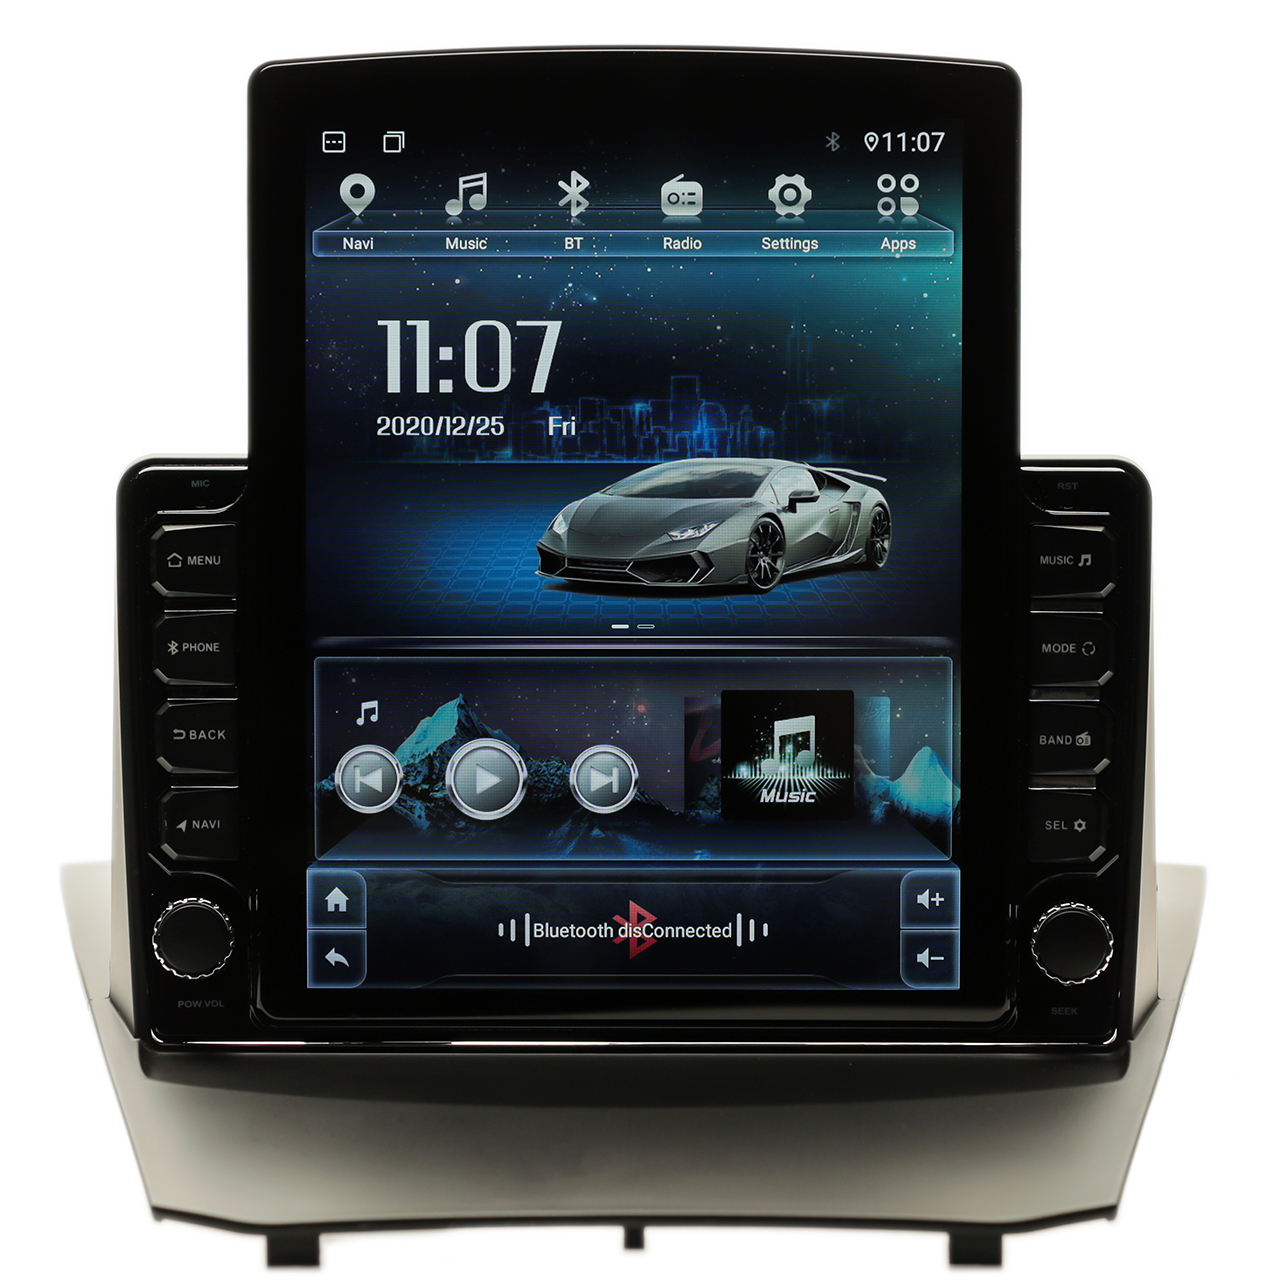 Navigatie AUTONAV ECO Android GPS Dedicata Ford Fiesta 2009-2016, Model XPERT Memorie 16GB Stocare, 1GB DDR3 RAM, Butoane Si Volum Fizice, Display Vertical Stil Tesla 10